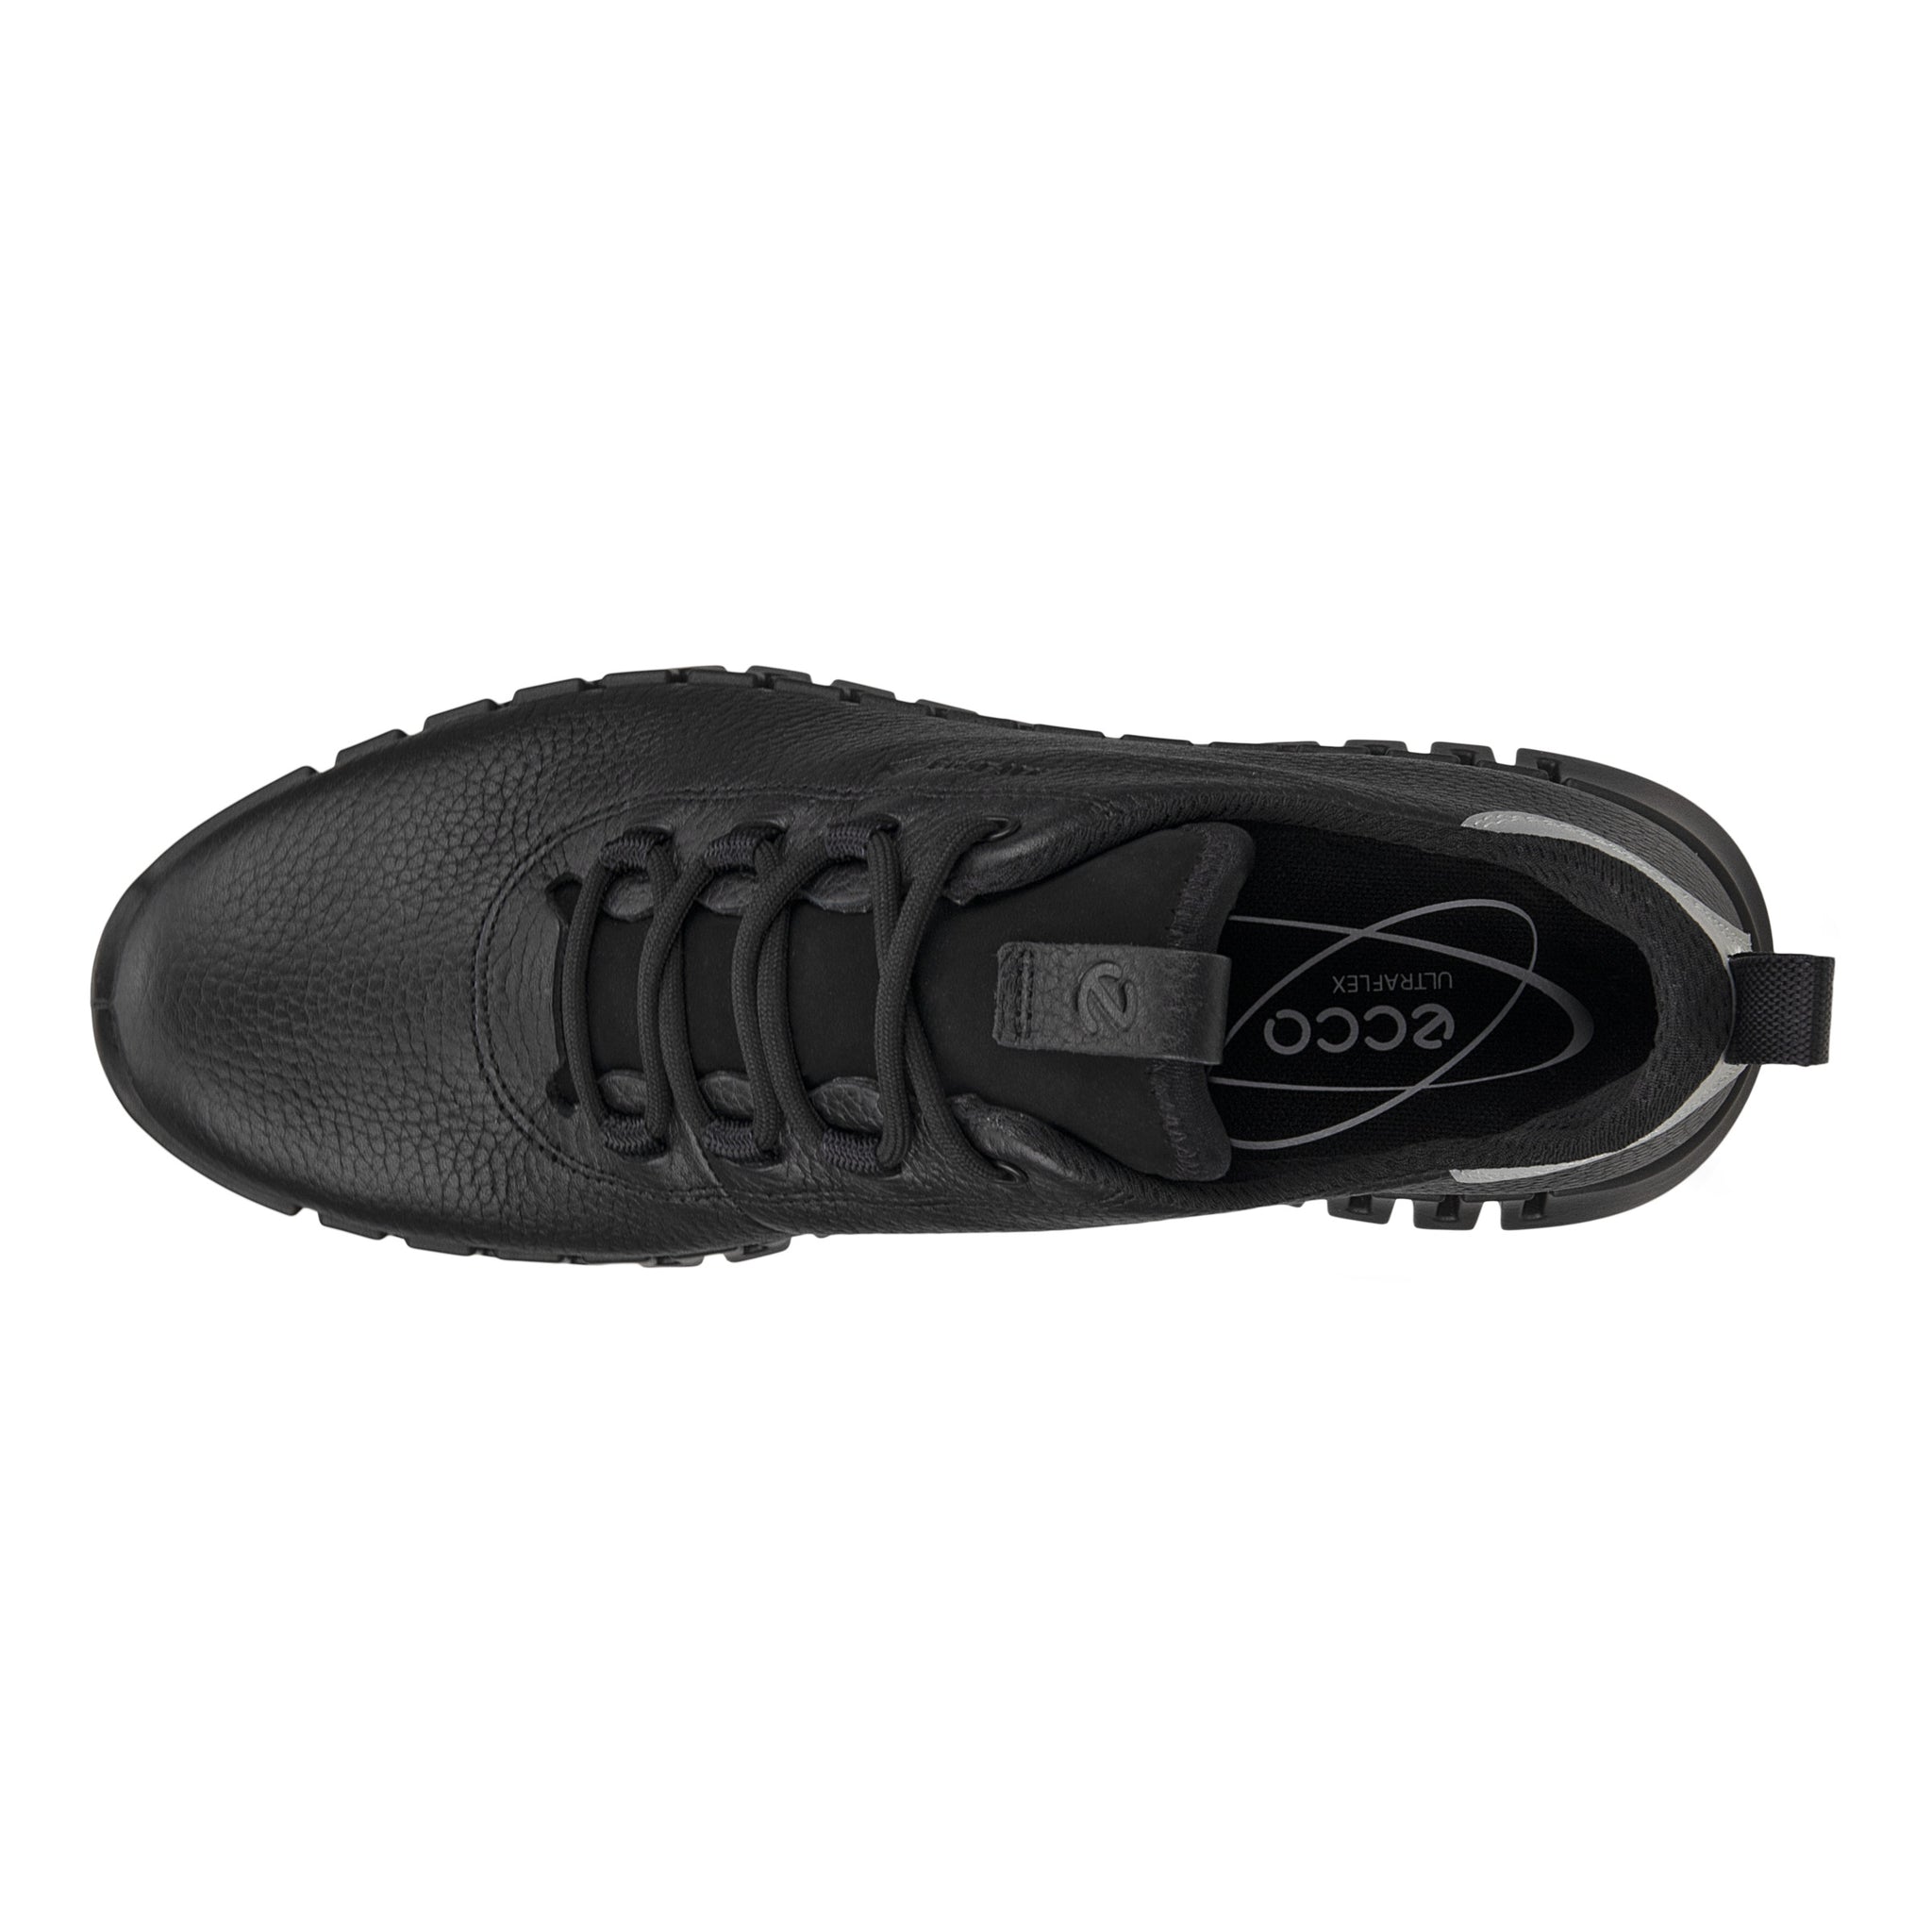 ECCO Gruuv (525224) - Mens Lace Goretex Shoe in Black. Ecco Shoes | Wisemans | Bantry | West Cork | Ireland